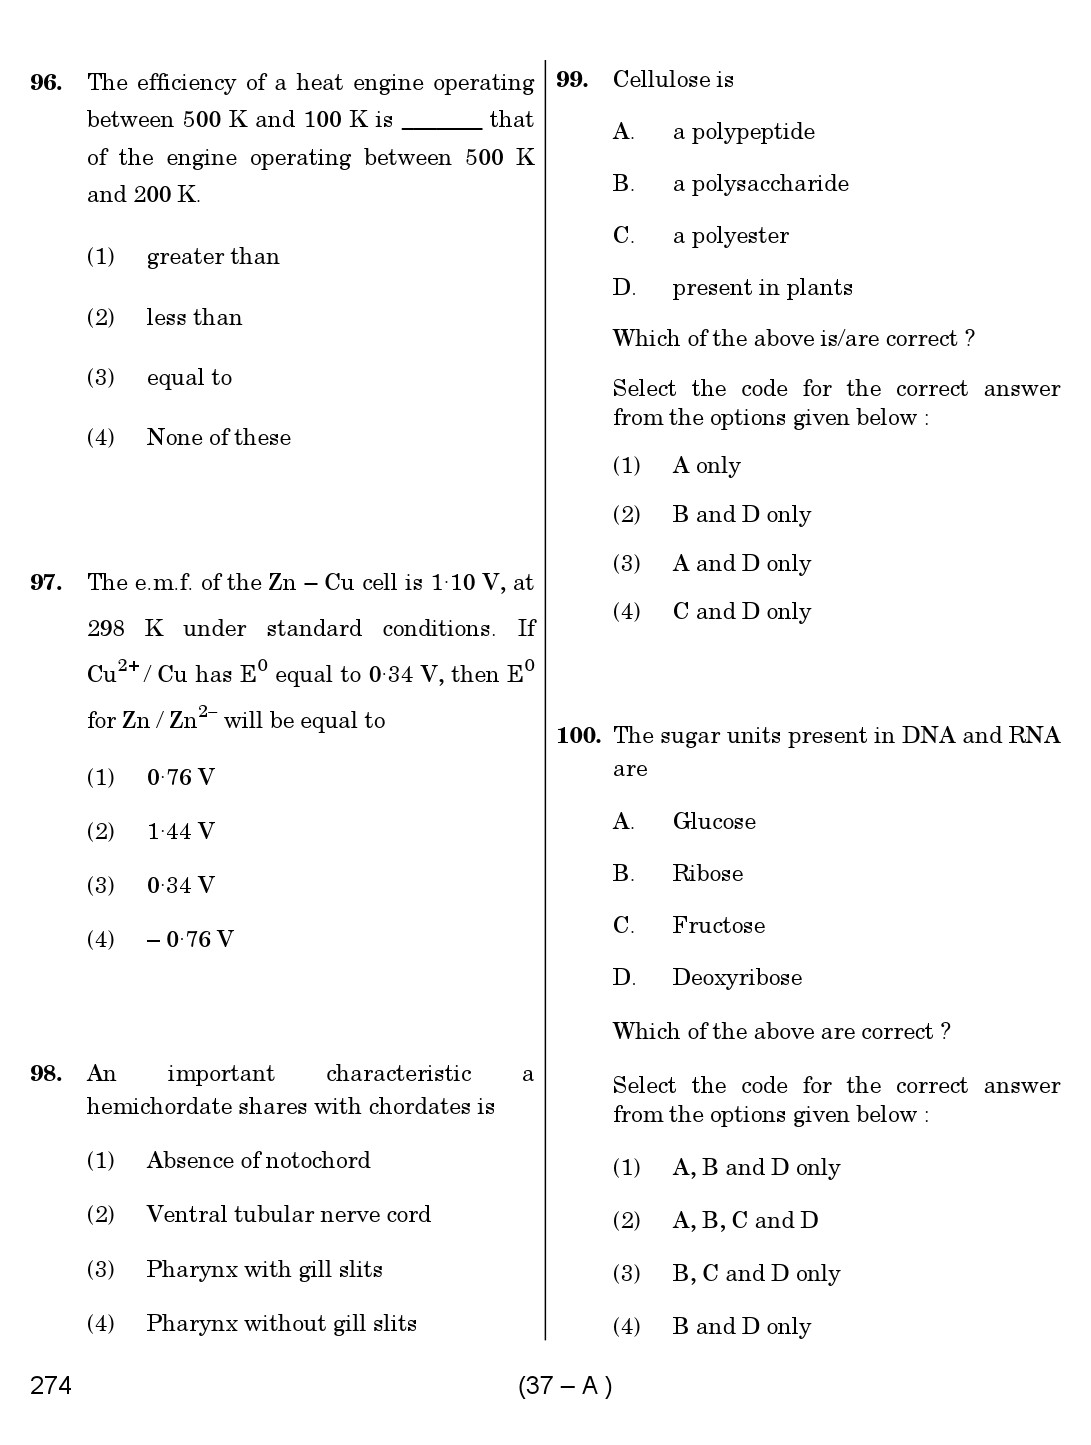 Karnataka PSC Science Teacher Exam Sample Question Paper Subject code 274 37